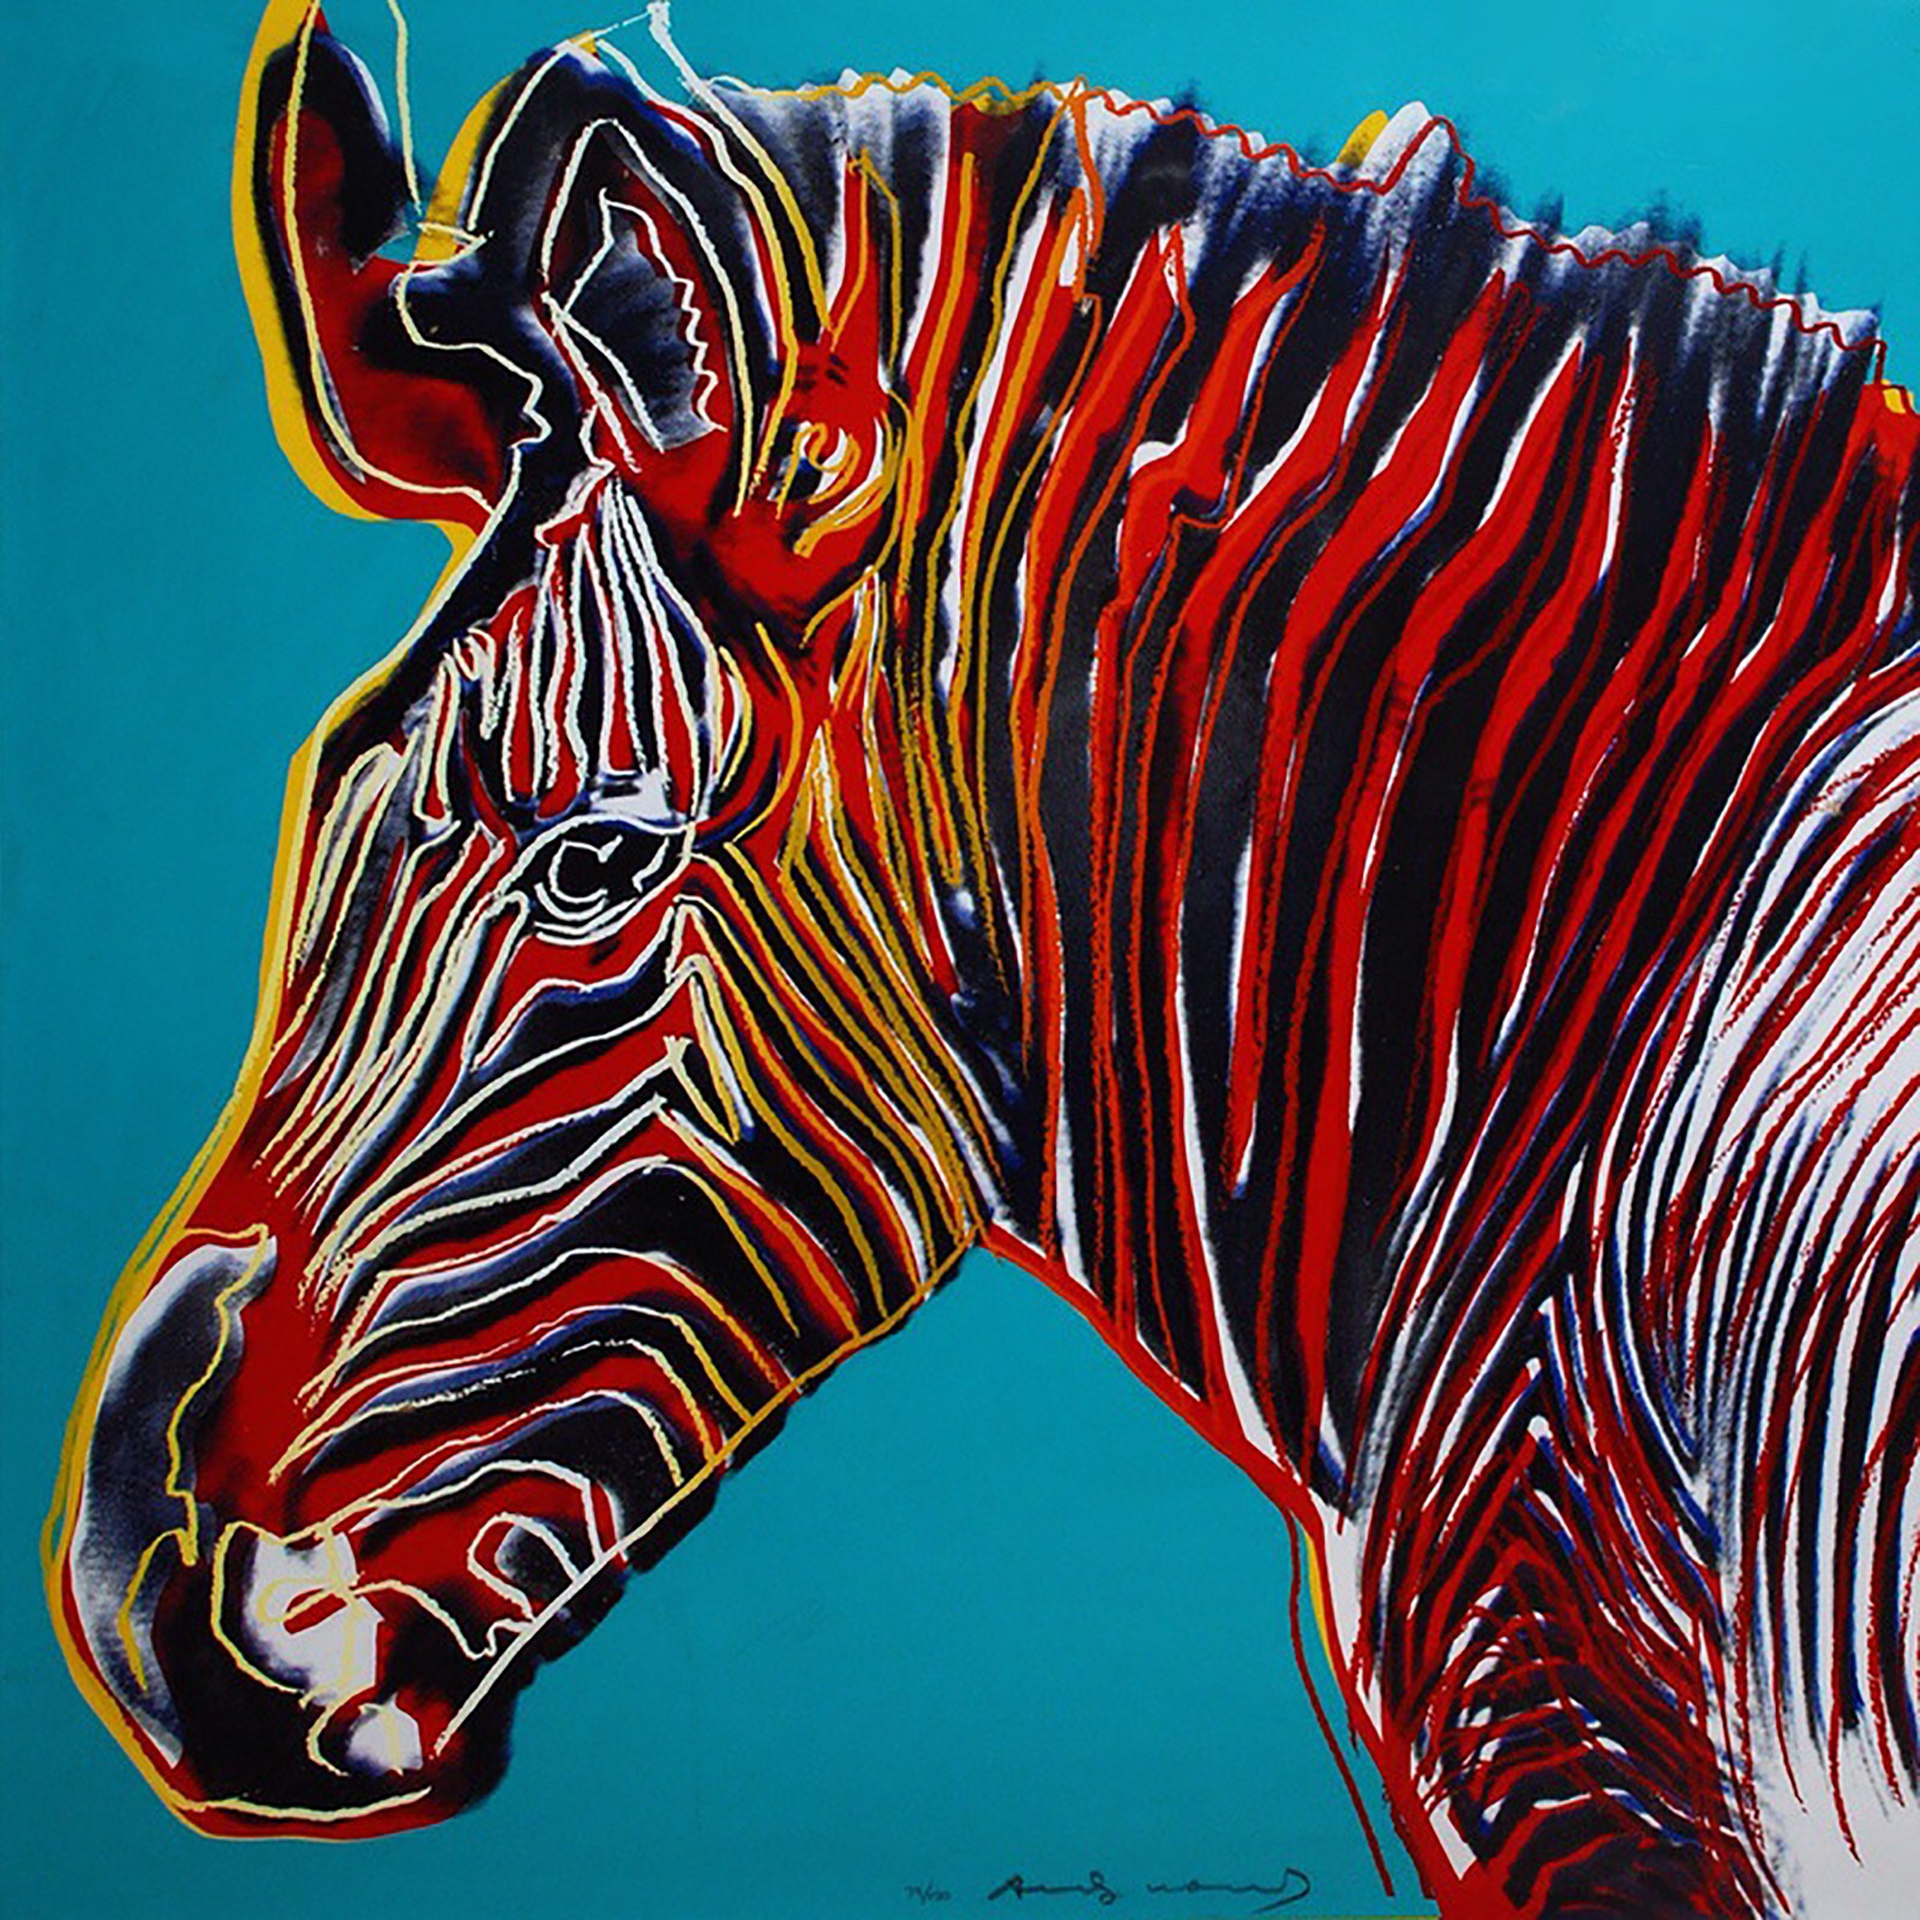 Andy Warhol, Grevy’s Zebra